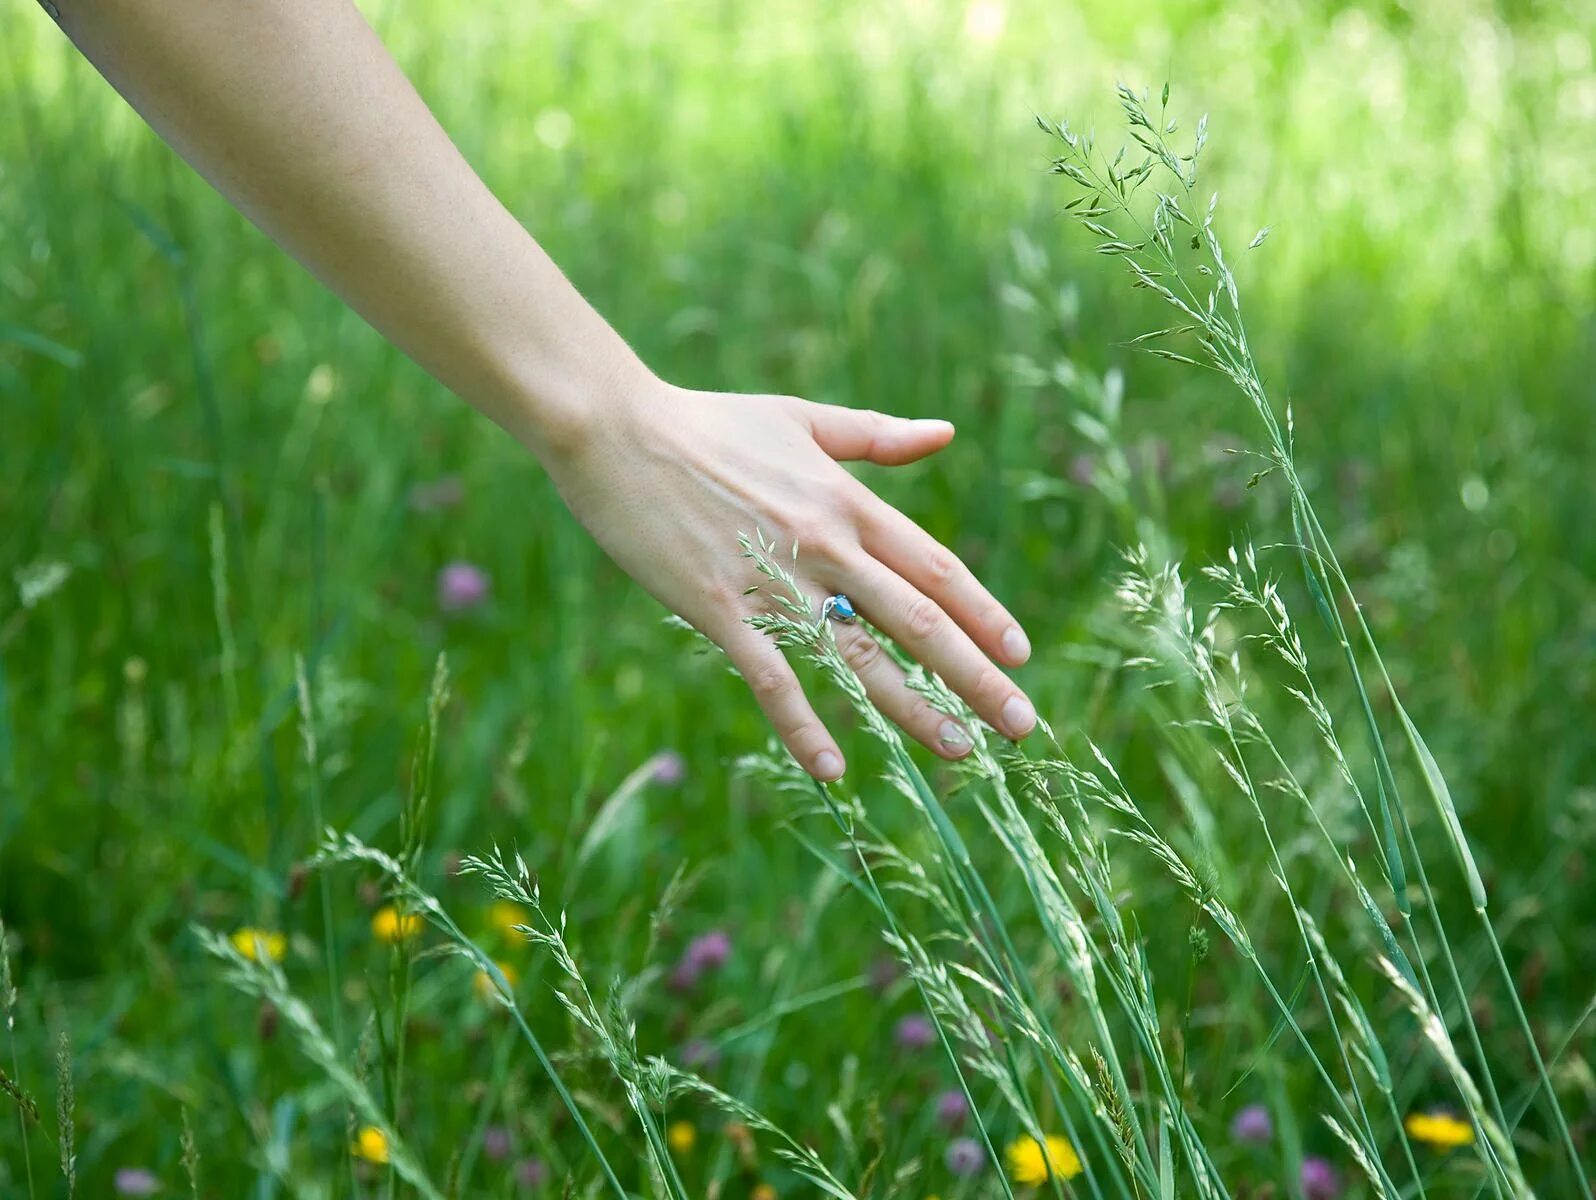 Рука по траве. Трава в руке. В траве рука в руке. Растение в руках.